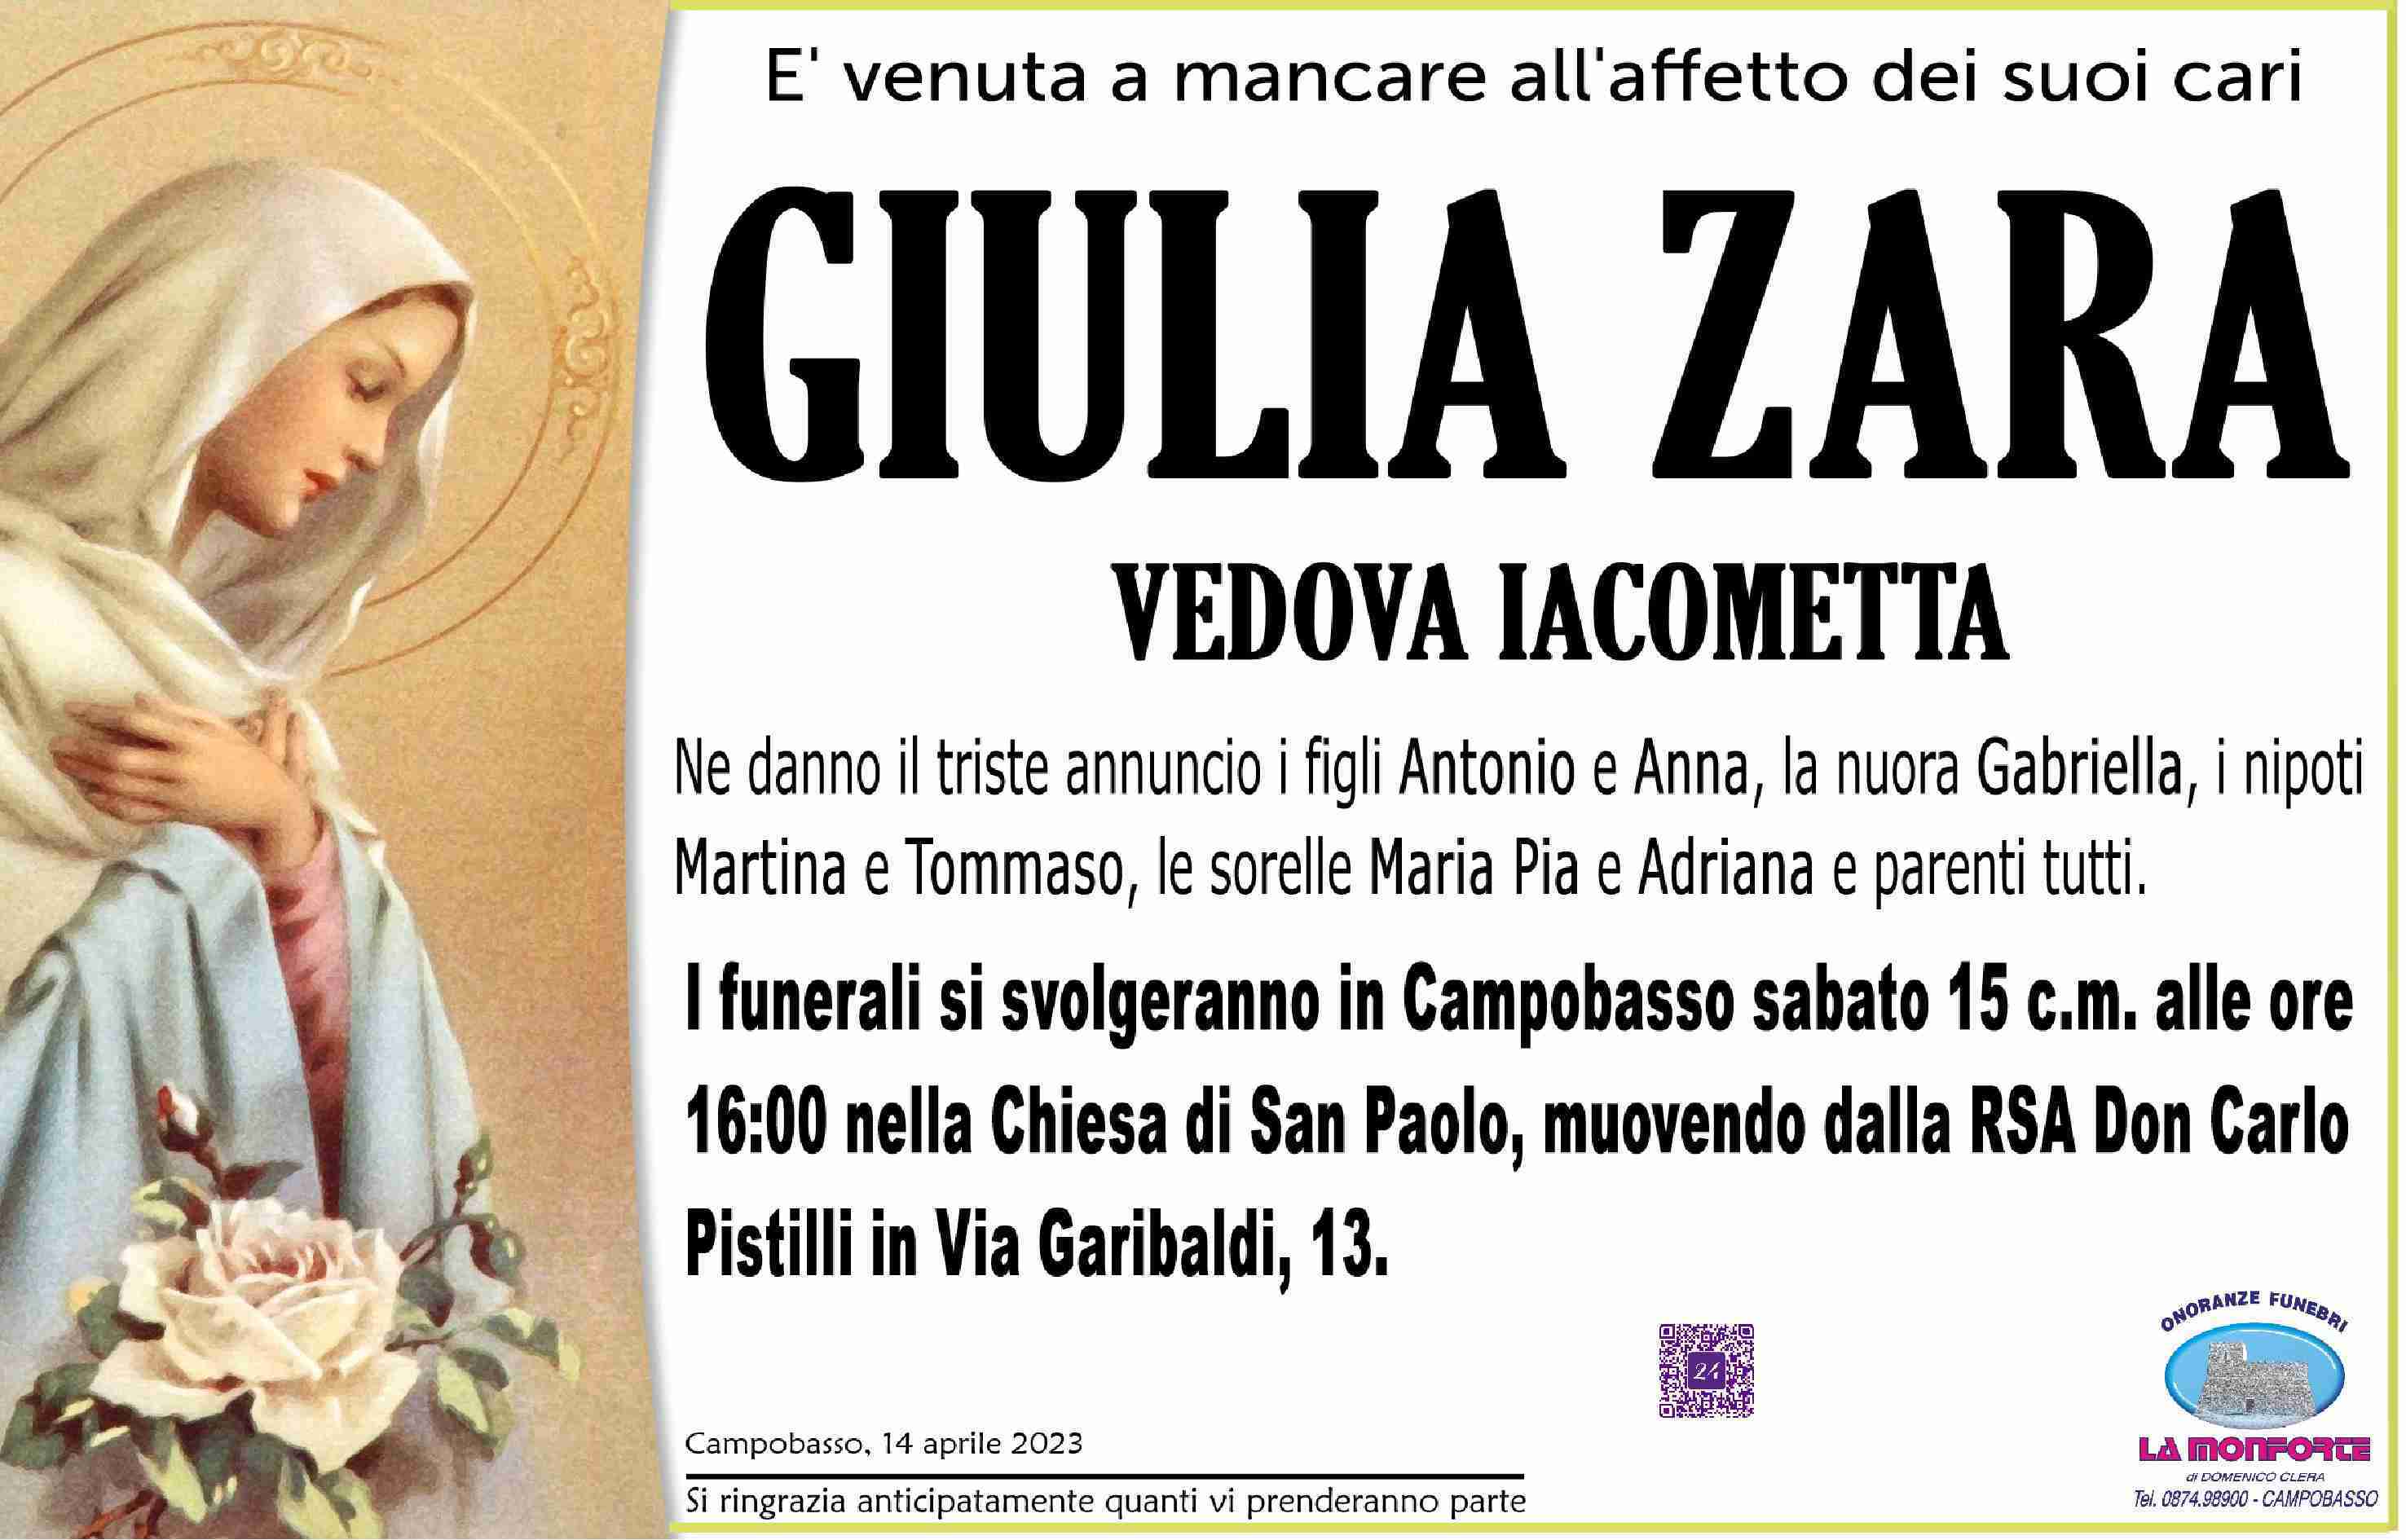 Giulia Zara